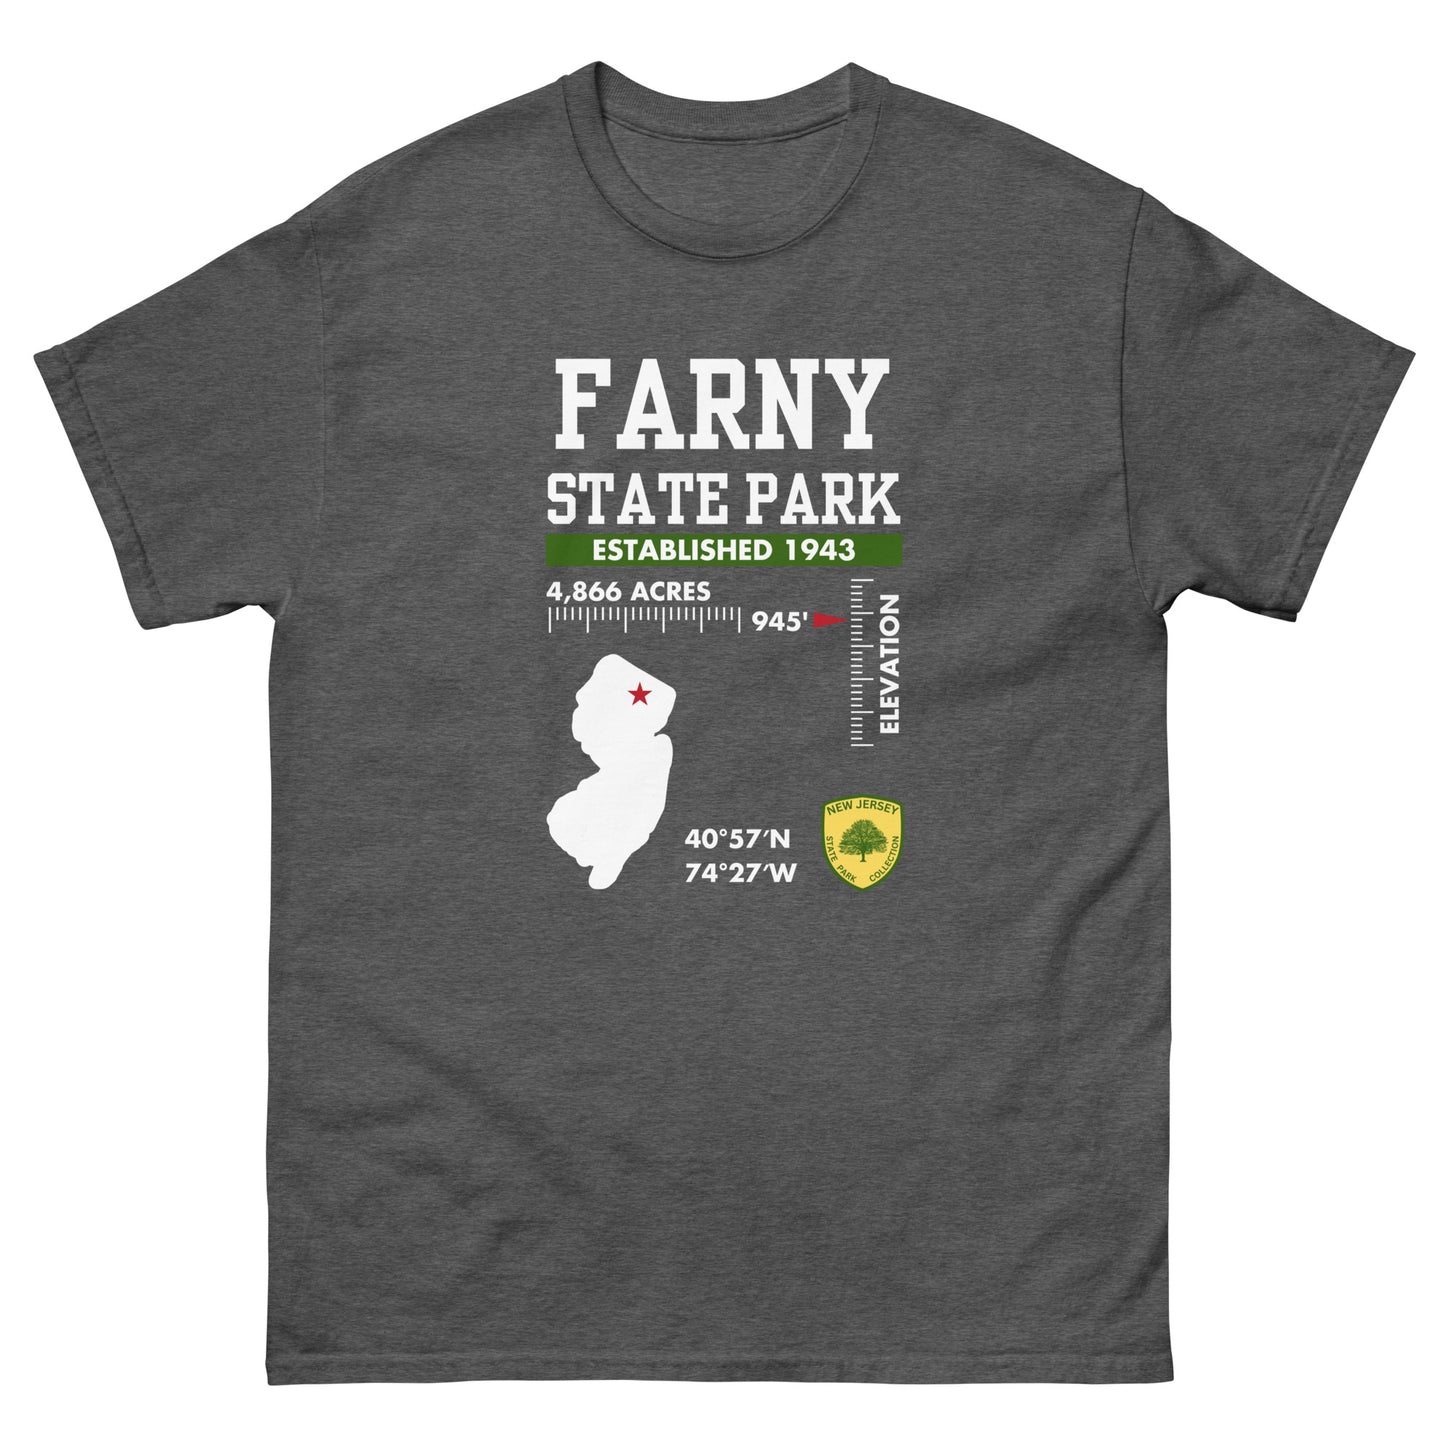 Men's Farny State Park Tee